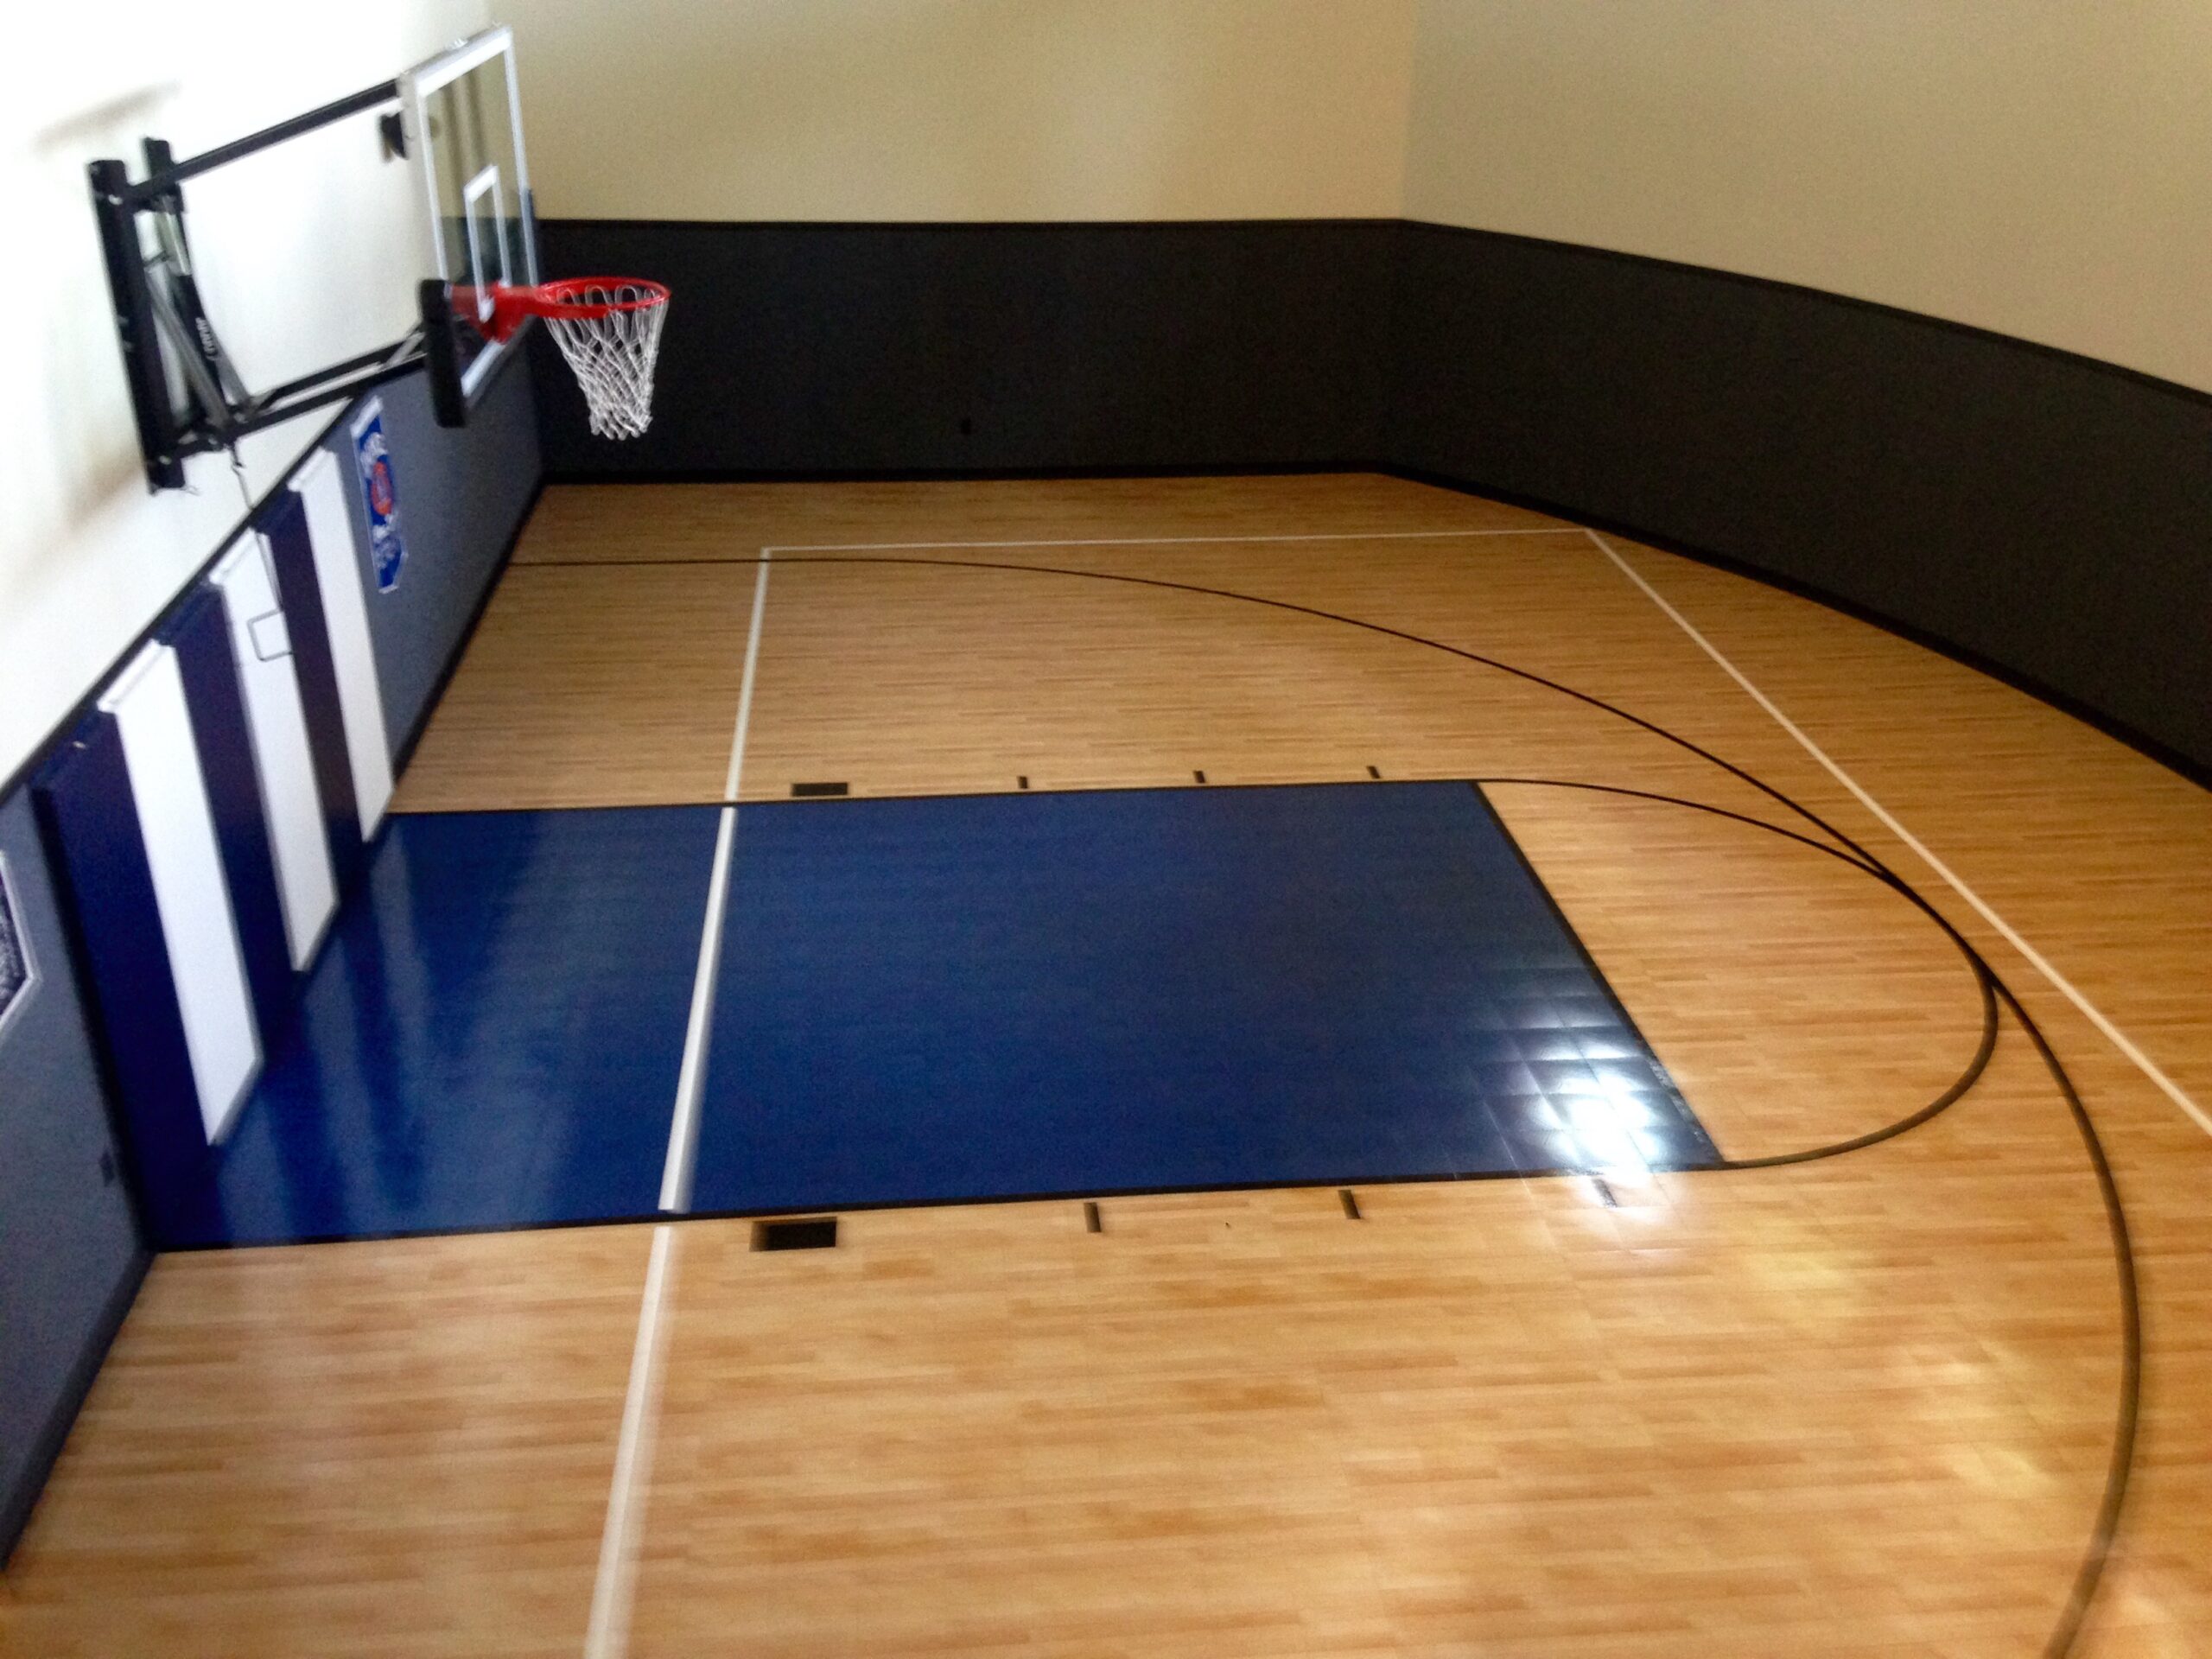 Hardwood Basketball Courts